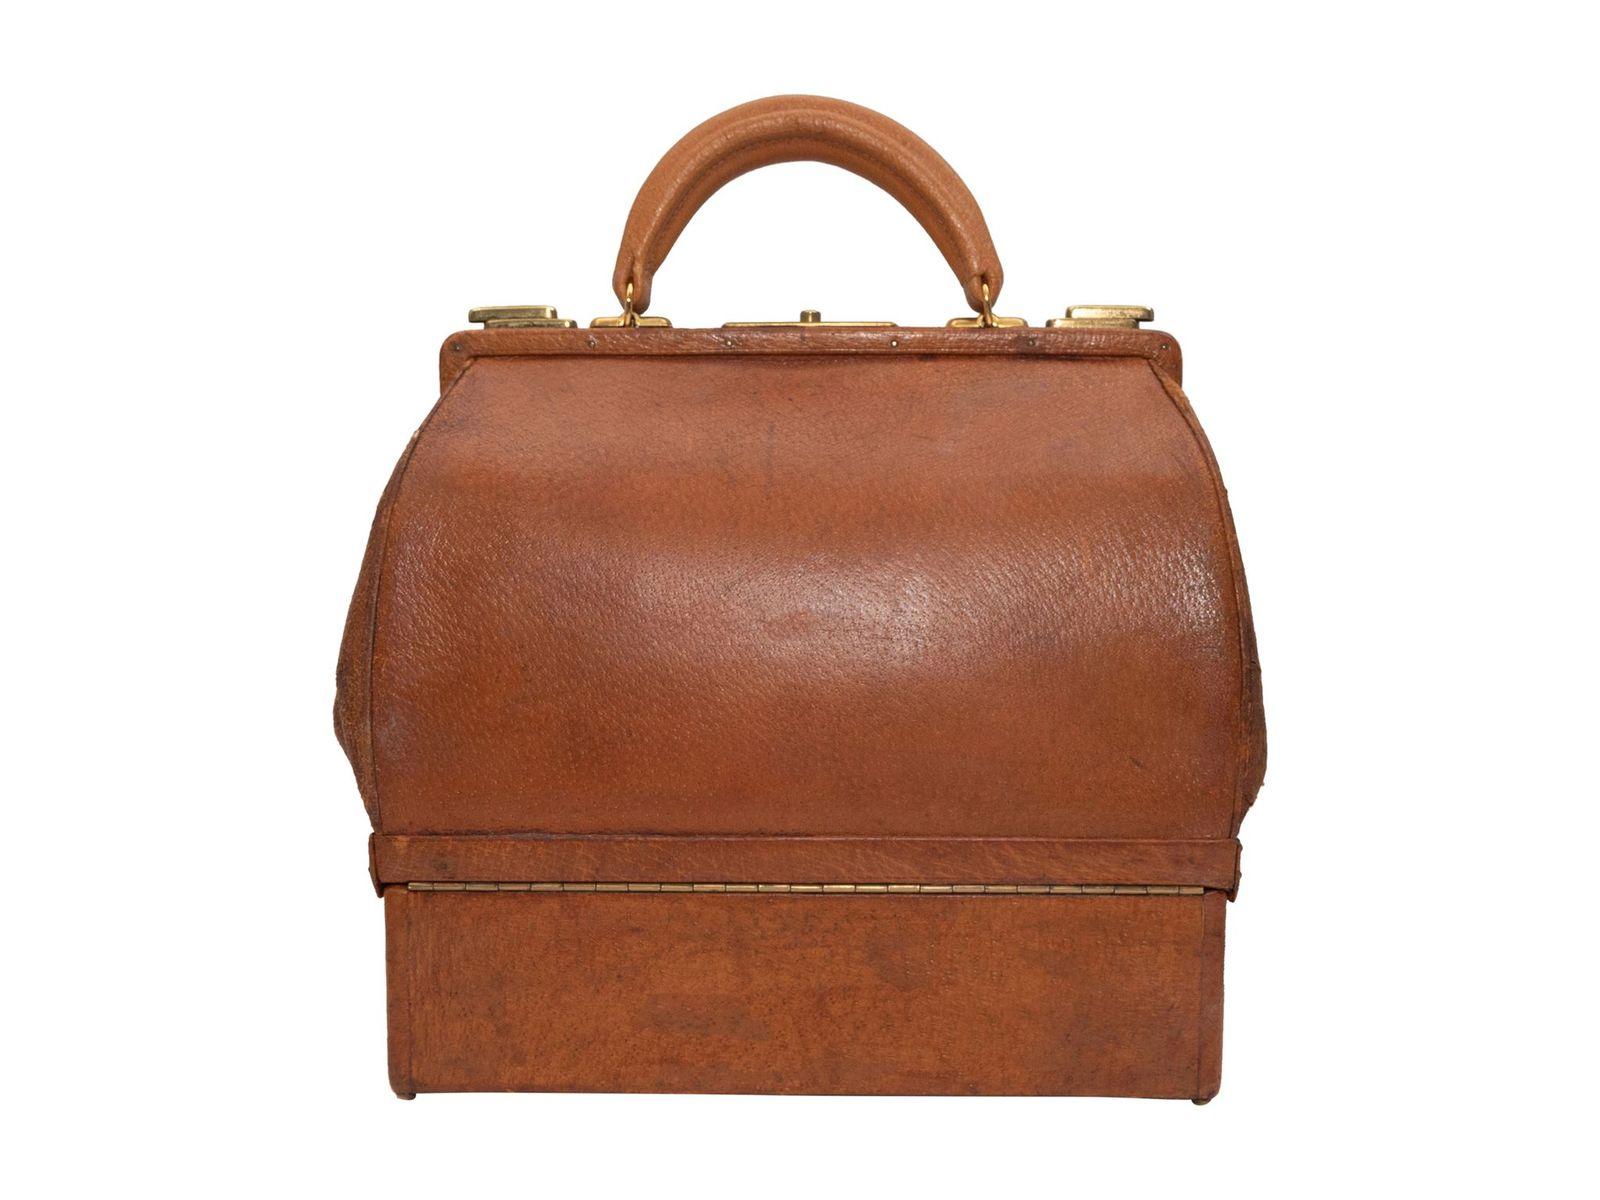 Hermes Vintage Tan Rare Sac Malette Bag 1